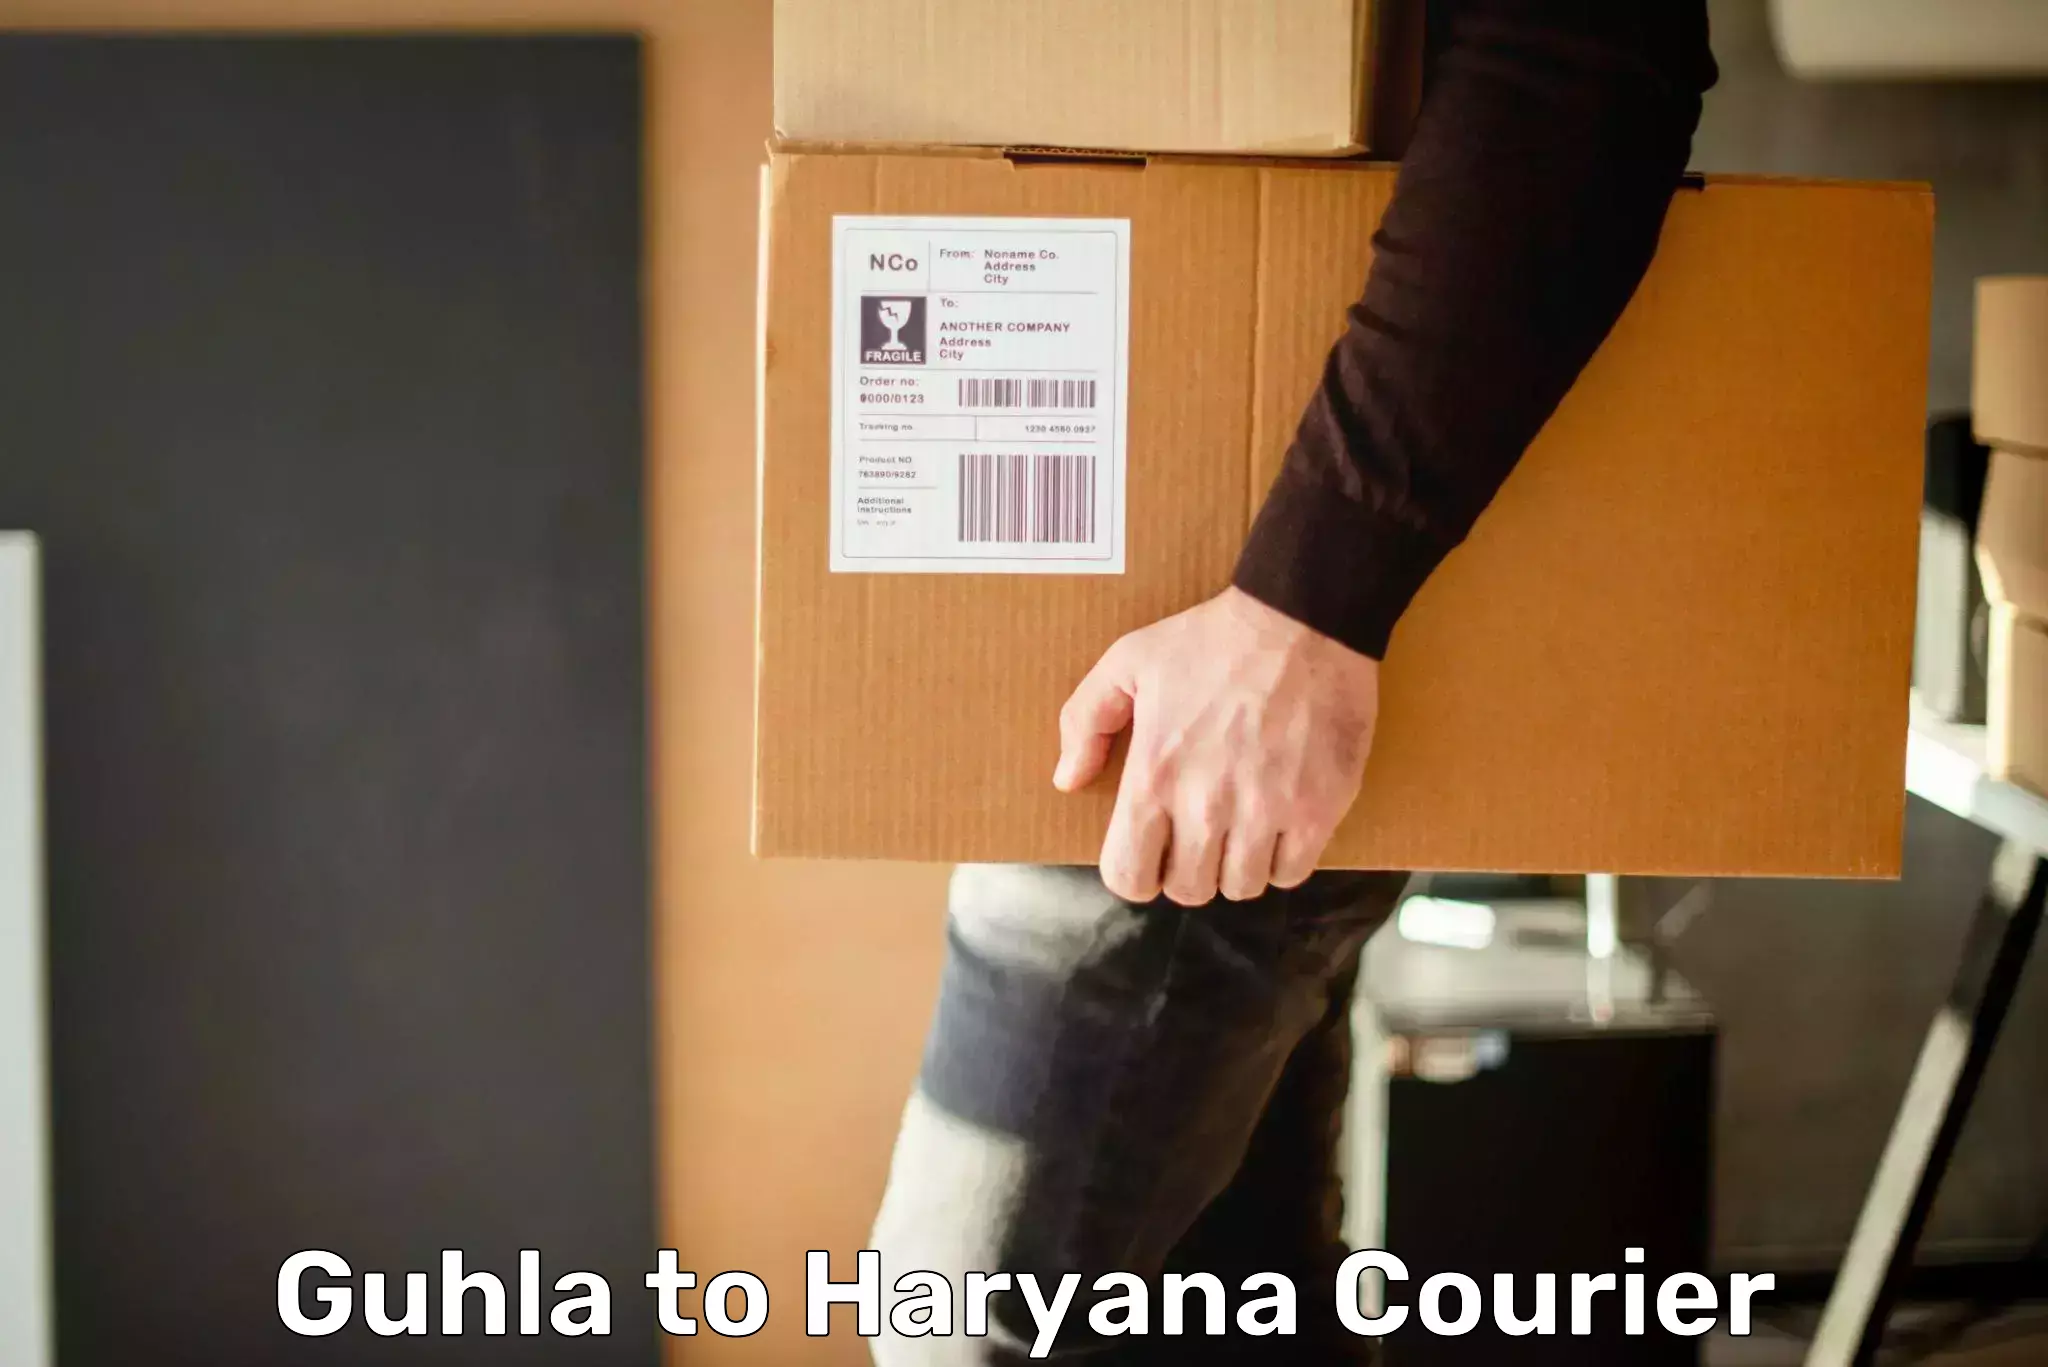 Courier service comparison Guhla to Sonipat